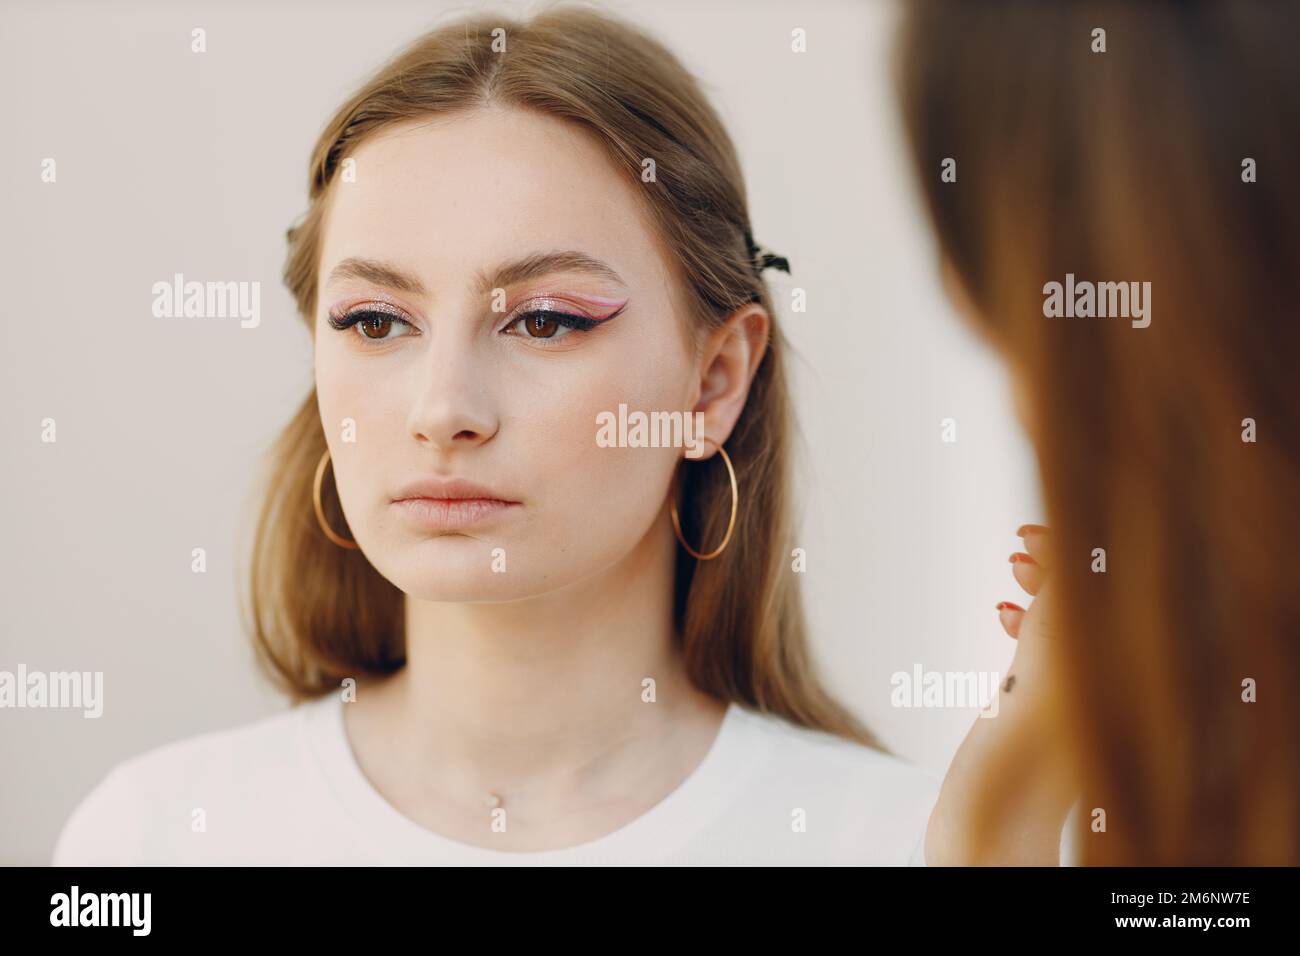 Beautiful young woman applying makeup beauty visage brush Stock Photo